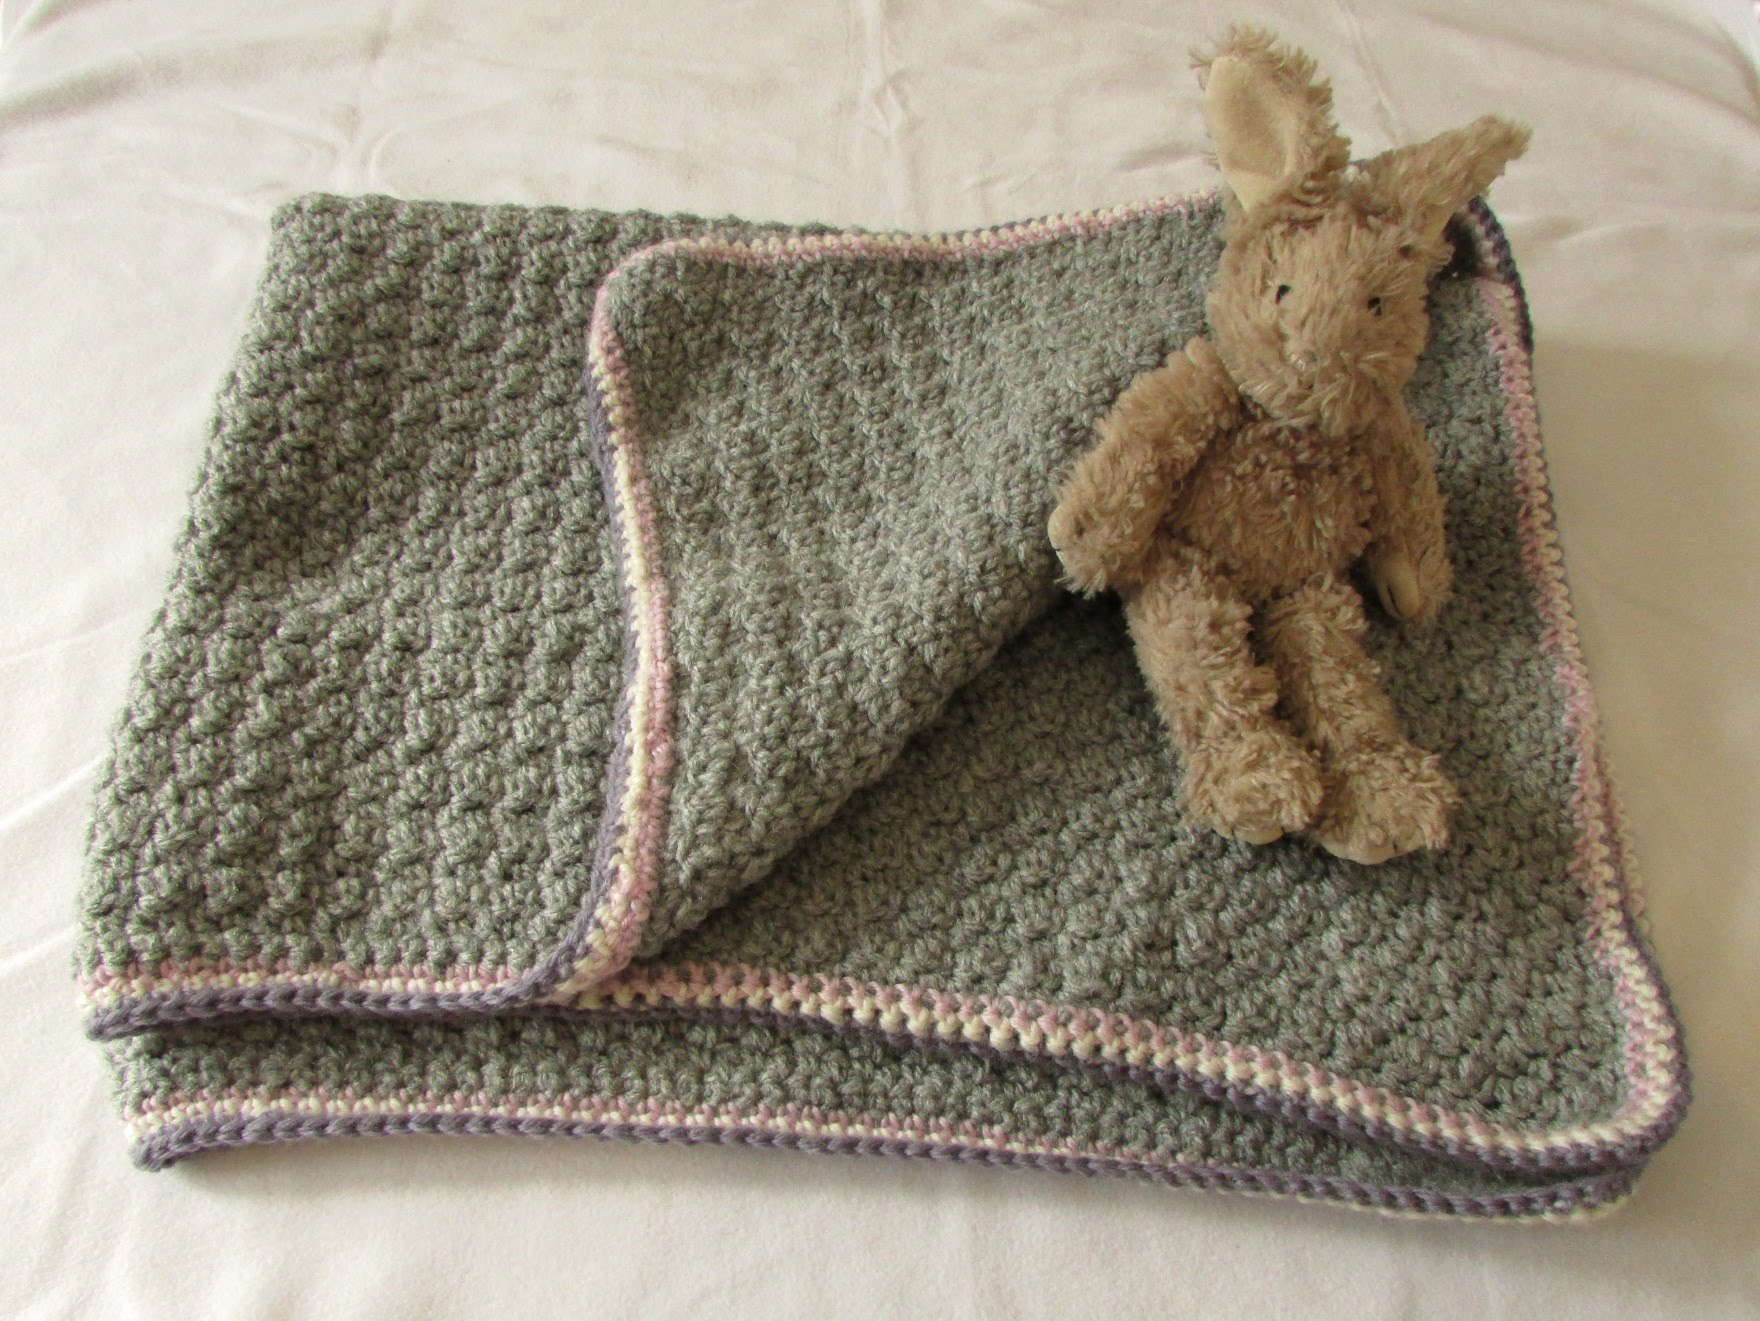 Knitting Patterns For Baby Blankets Easy Three Easy Crochet Ba Blanket Ideas Crochet And Knitting